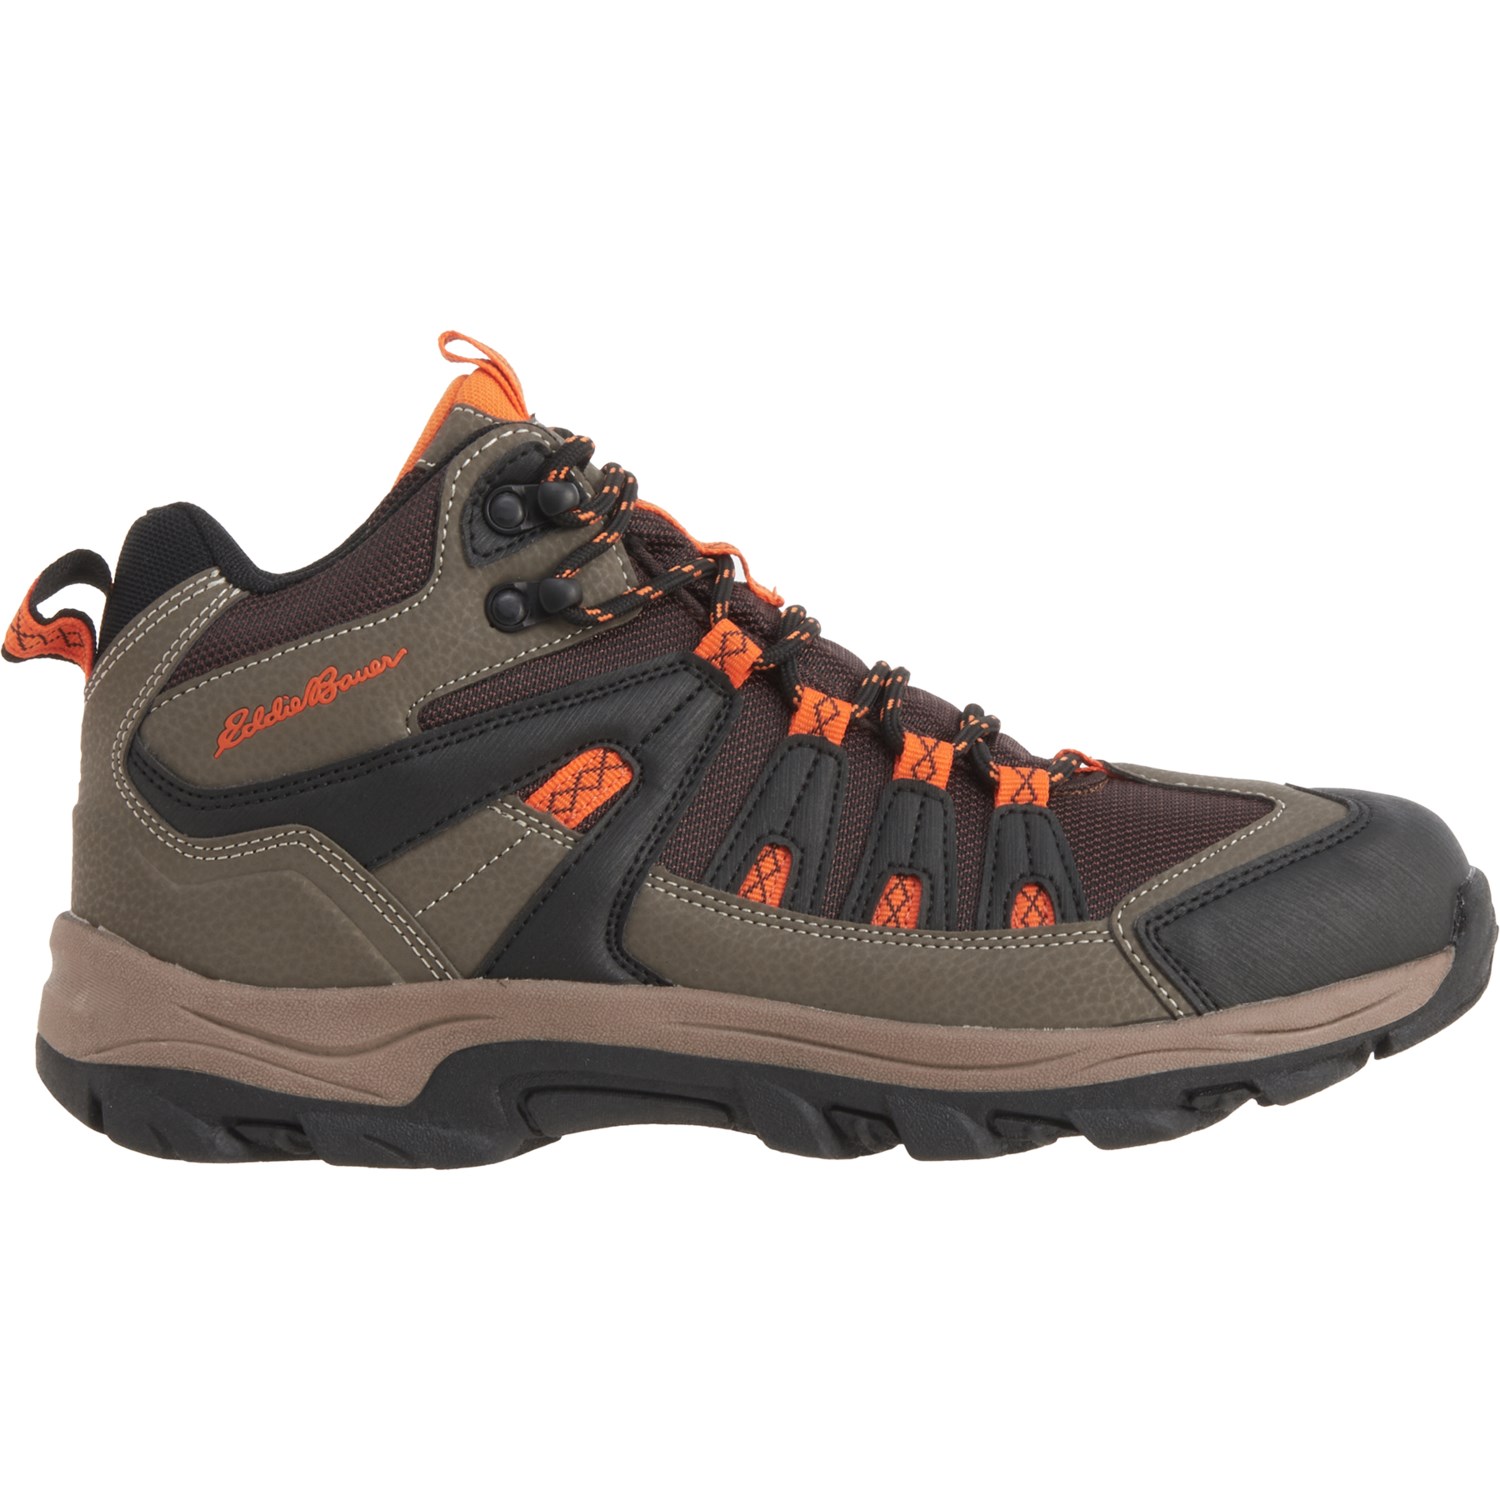 Eddie Bauer Lakewood Hiking Boots (For Men) - Save 42%